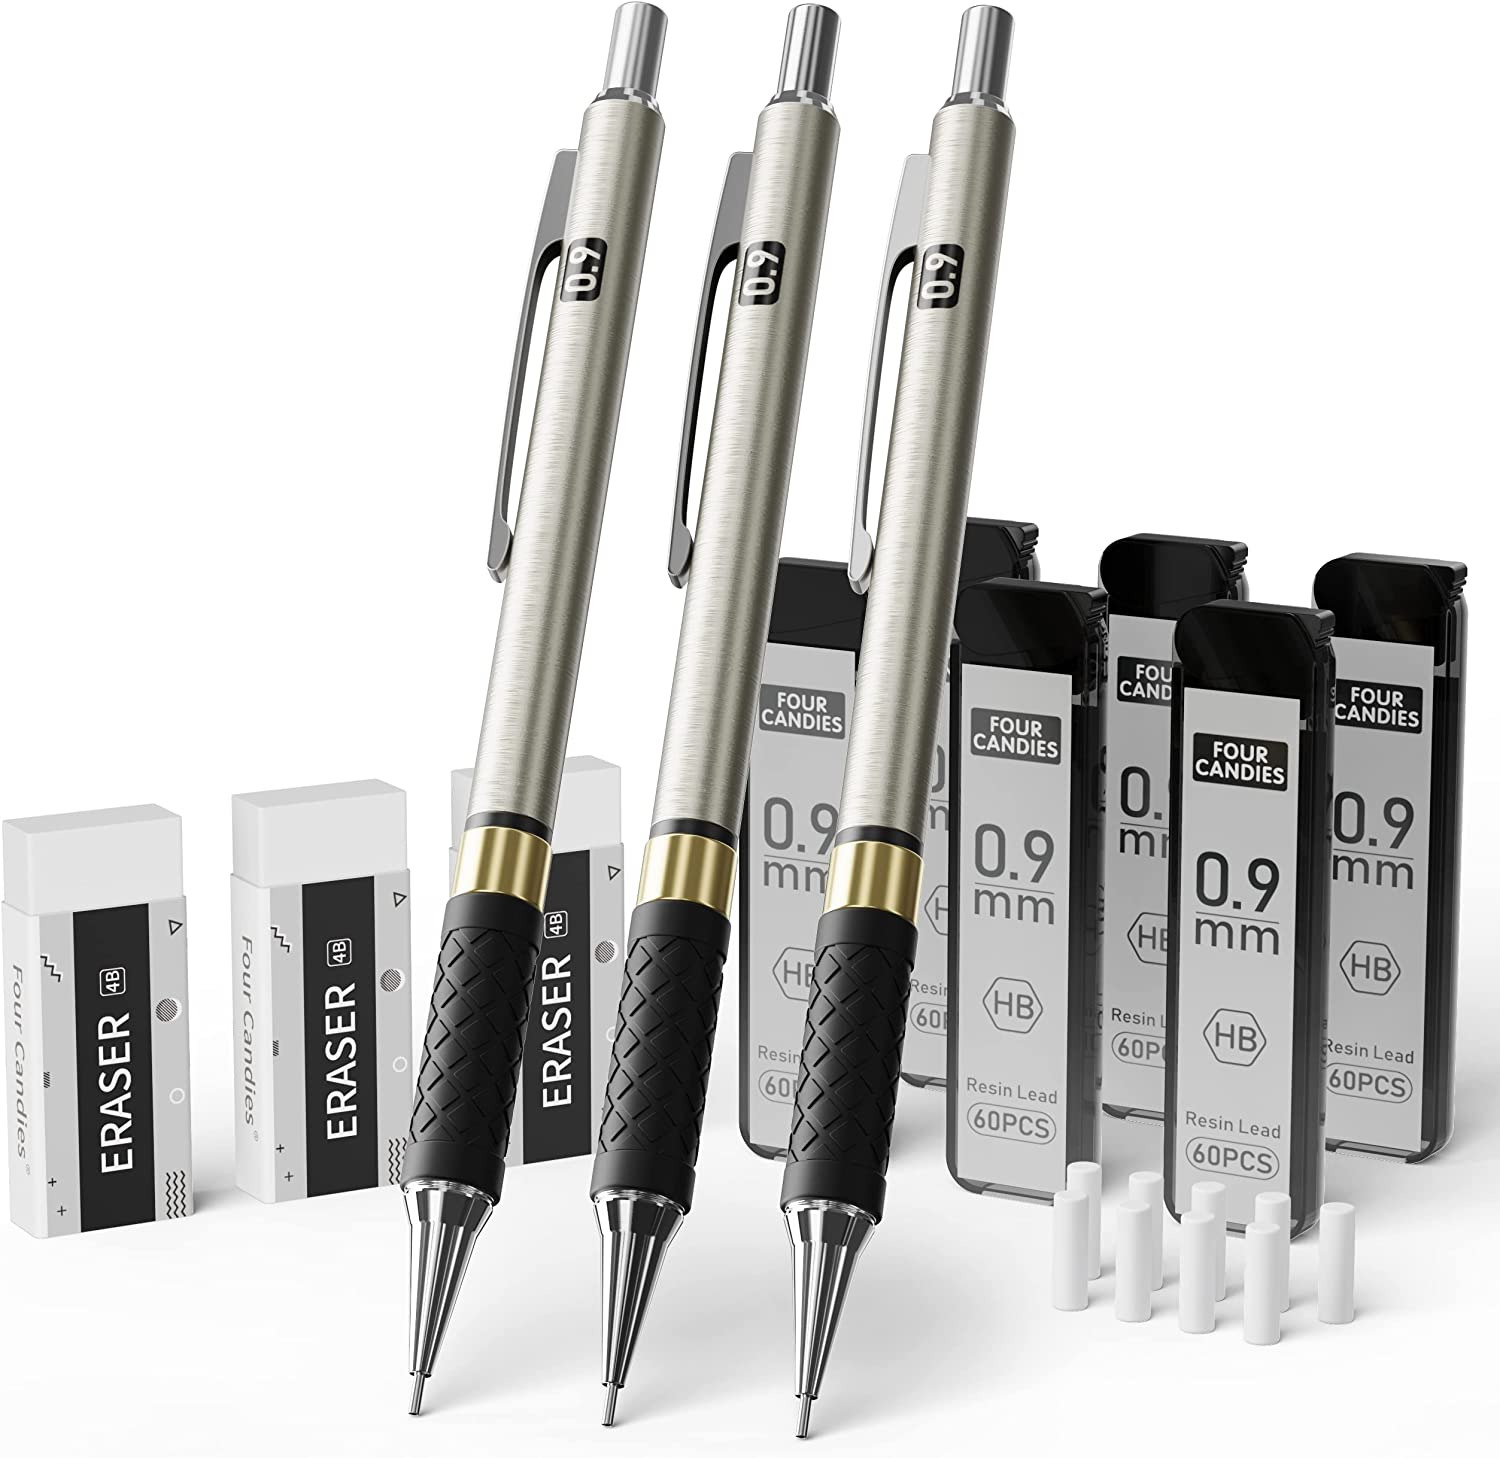 Metal Mechanical Pencil Set - 3PCS 0.9Mm Art Mechanical Pencils & 360PCS HB Lead